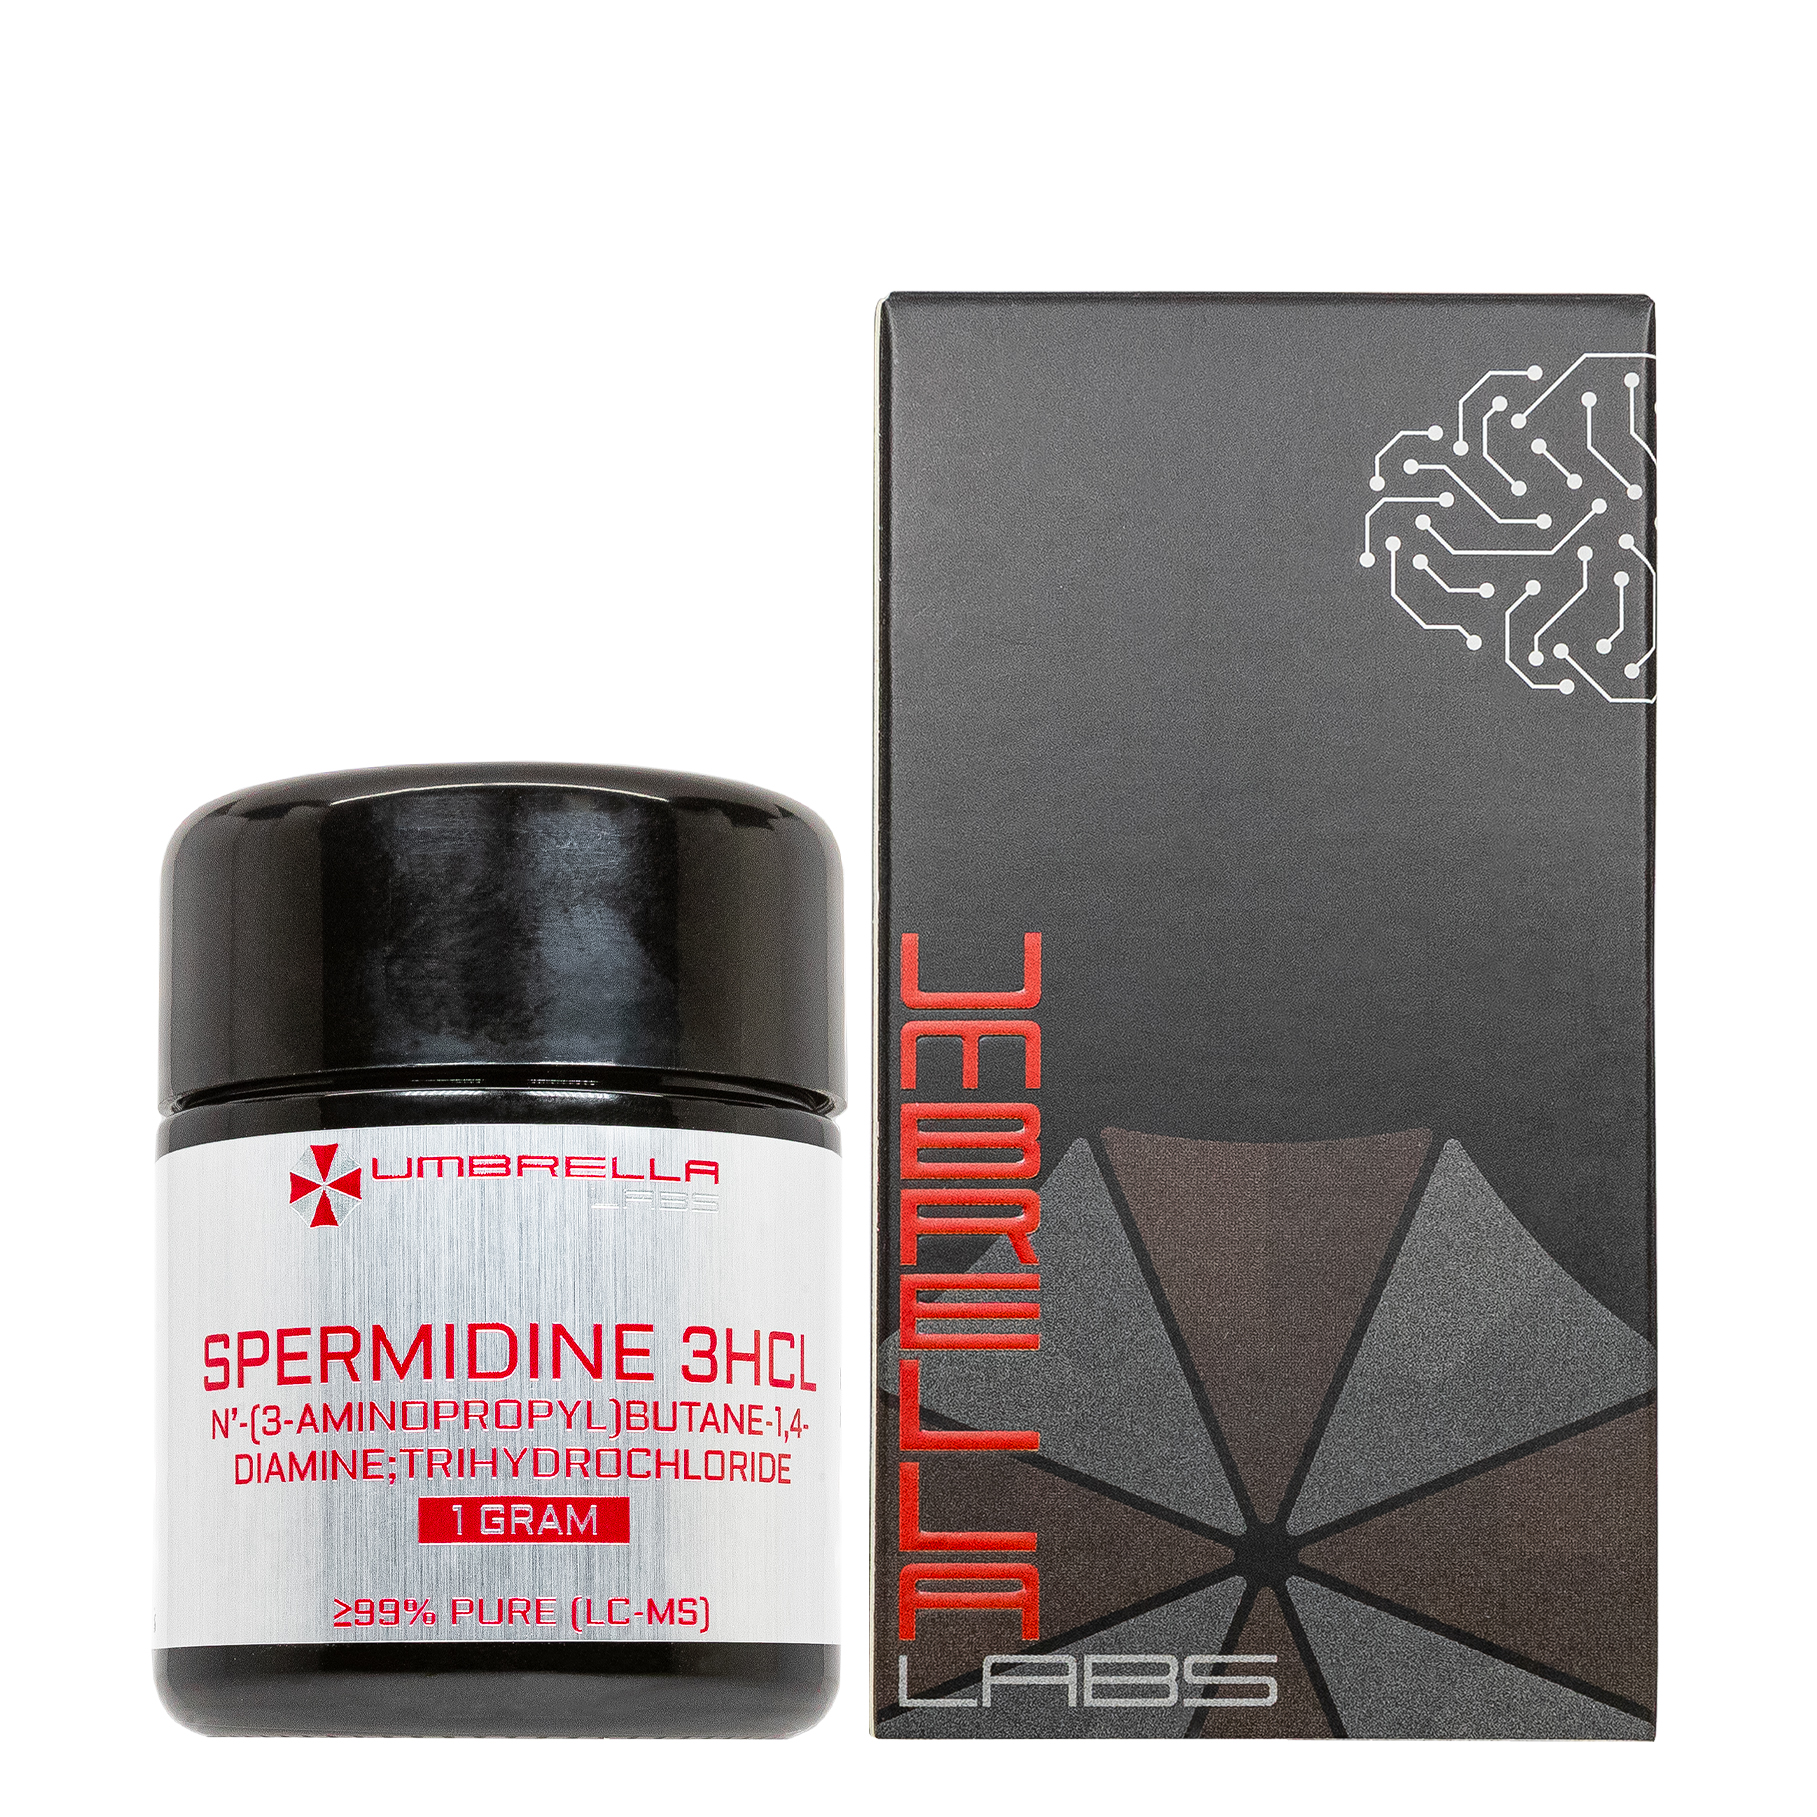 spermidine 3hcl powder (1 gram)